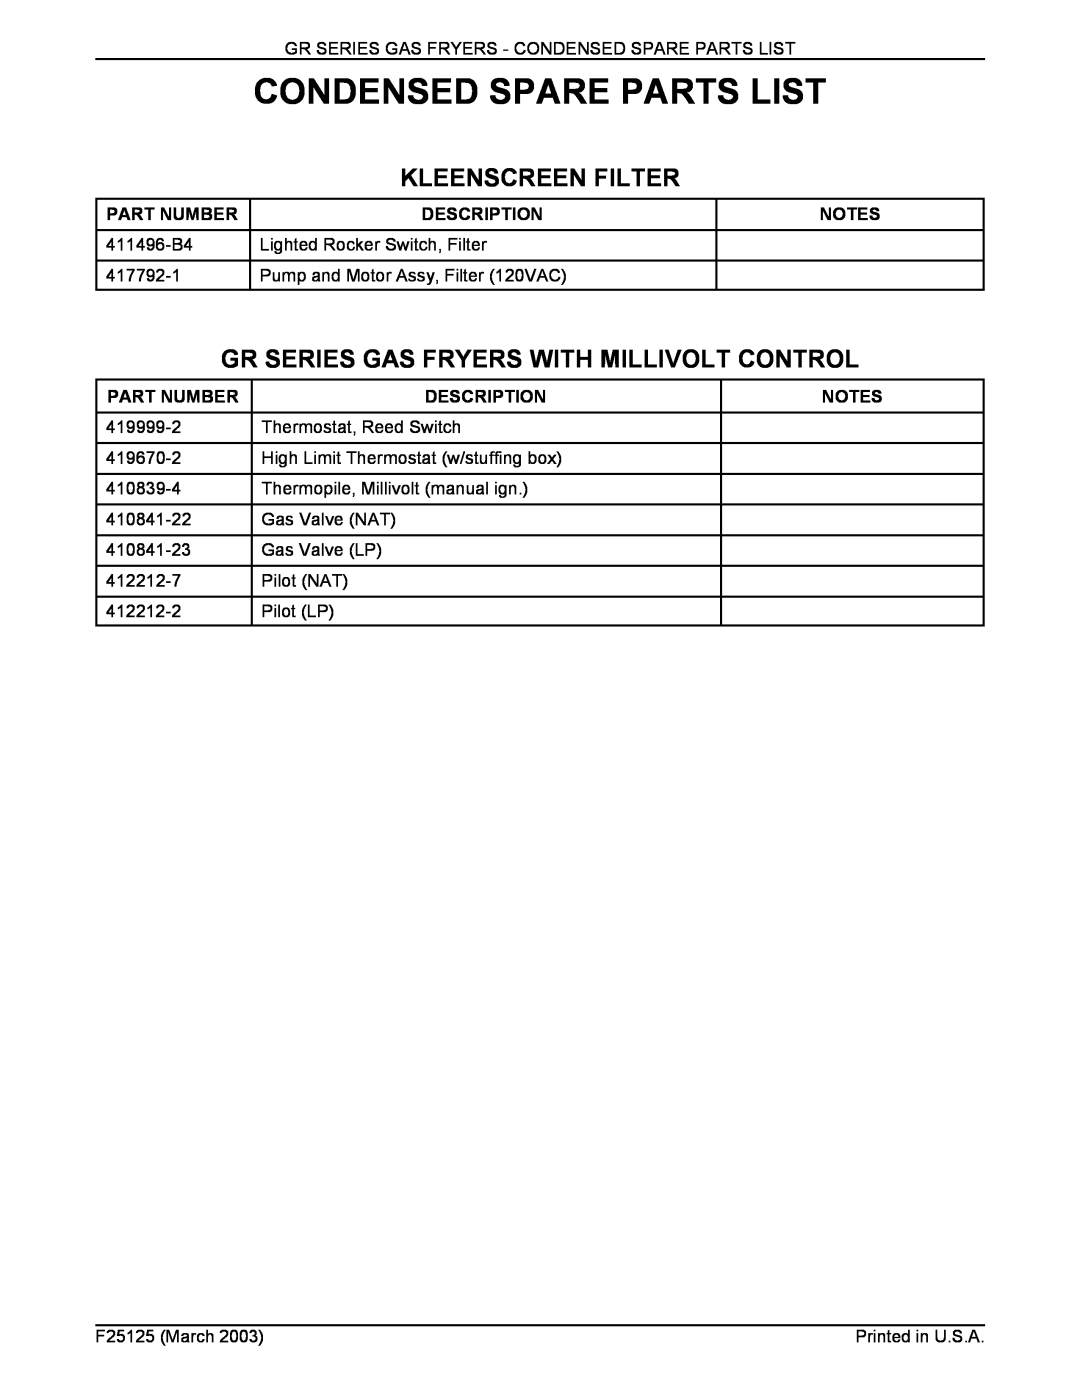 Vulcan-Hart GR25, GR45, GR65 Condensed Spare Parts List, Kleenscreen Filter, Gr Series Gas Fryers With Millivolt Control 